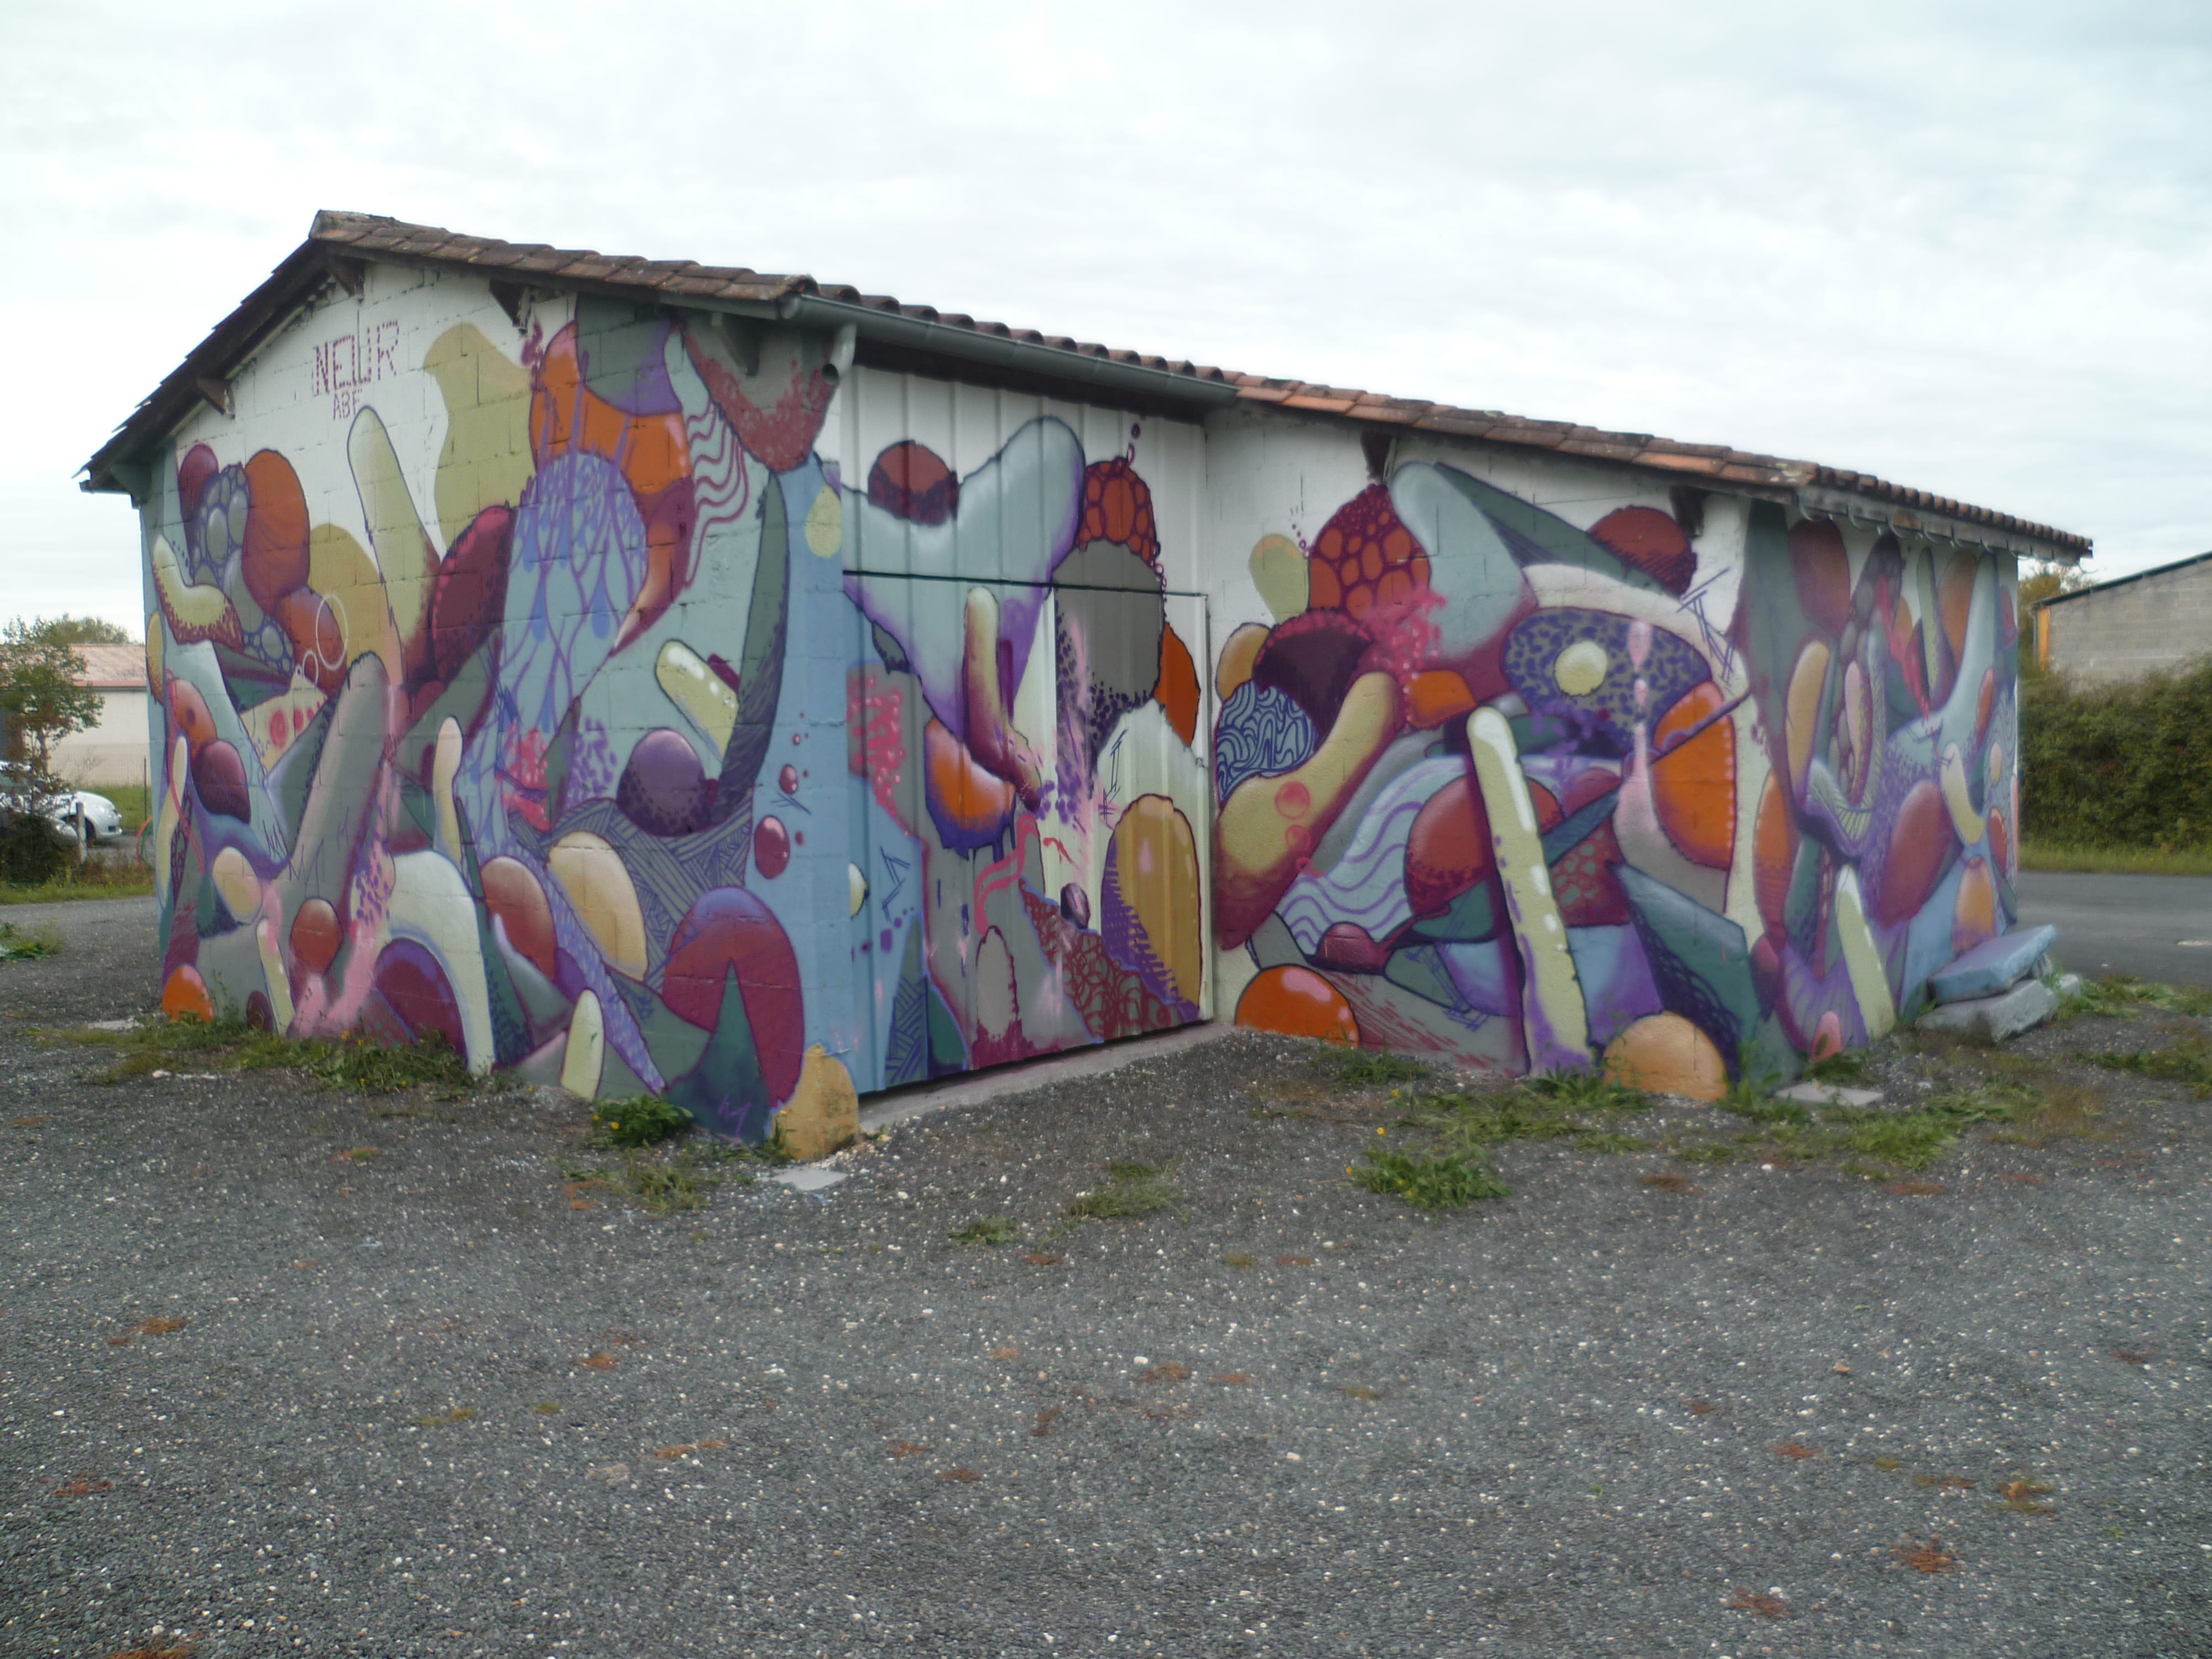 Graffiti 5657 #neurabf captured by Neur Abf in Marsac-sur-l'Isle France